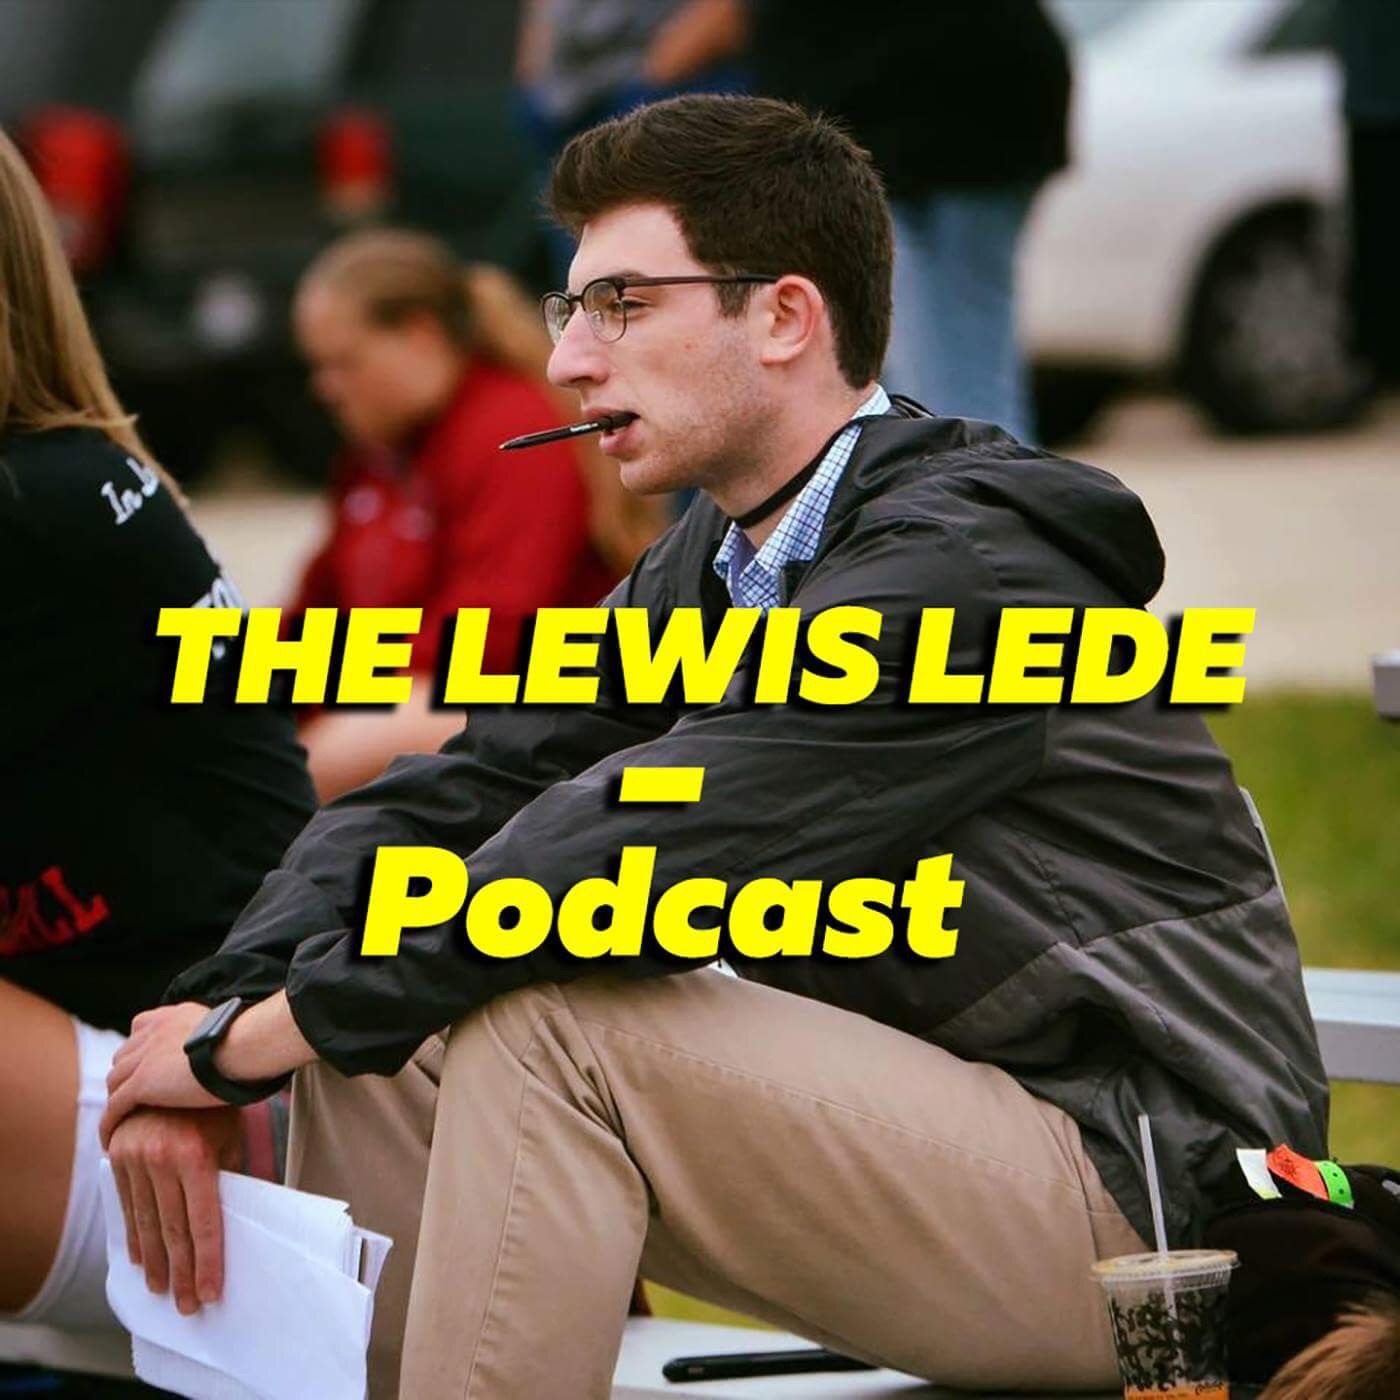 The Lewis Lede Podcast